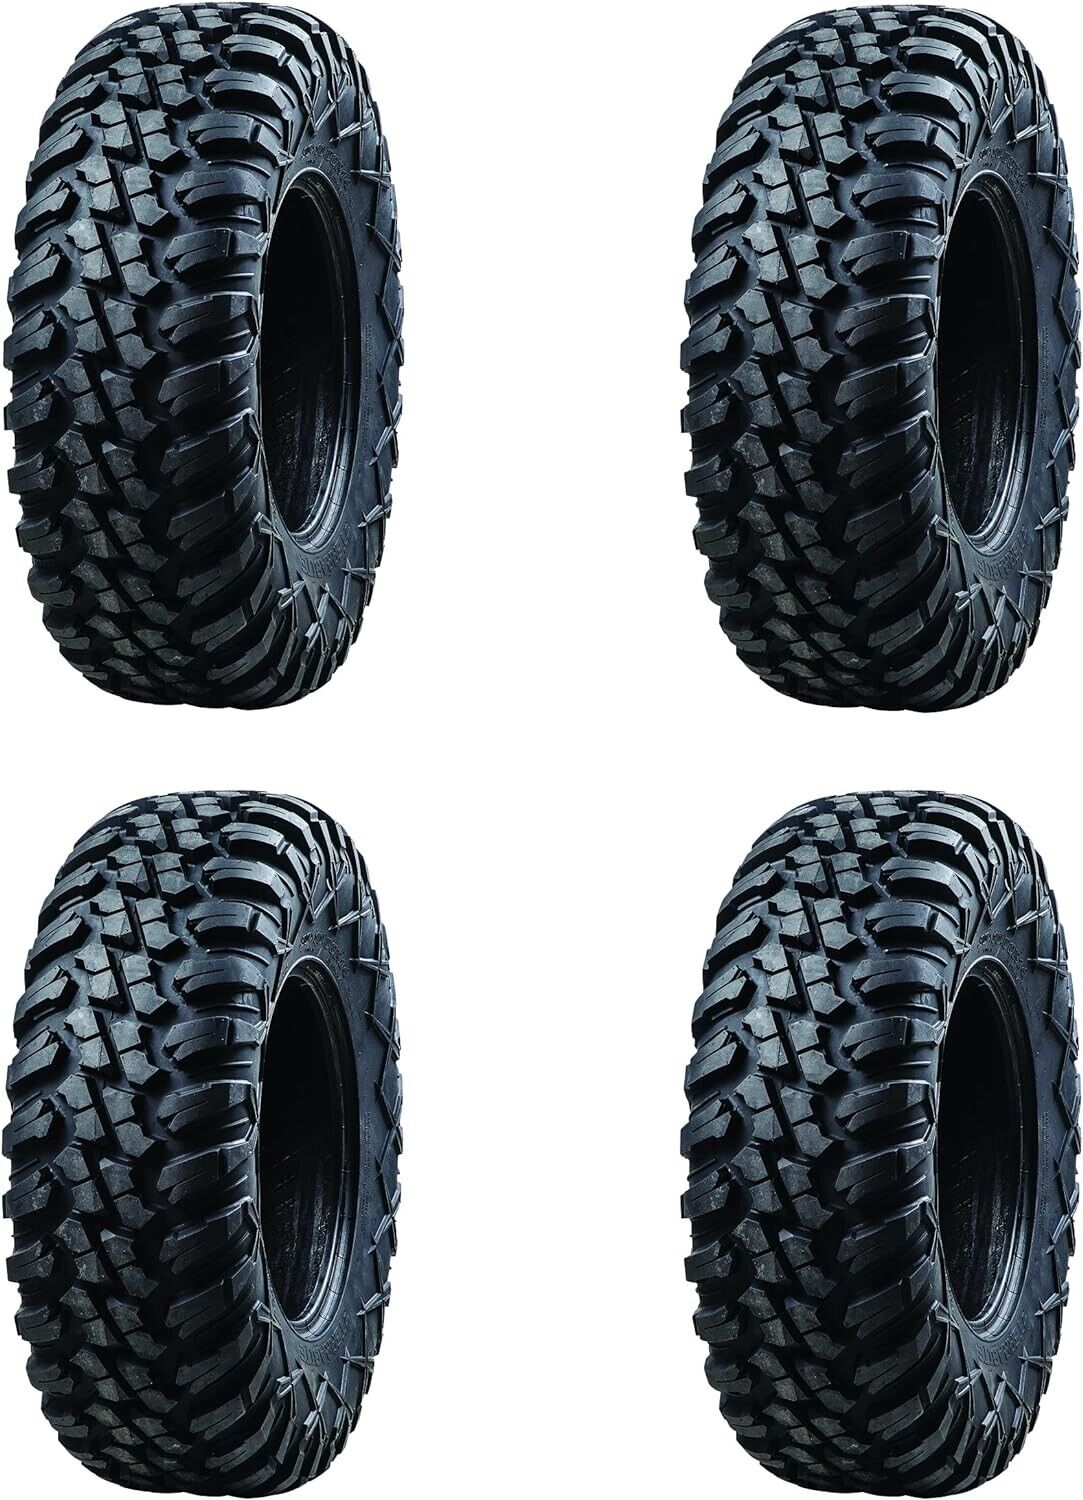 Tusk Terrabite® Radial Front & Rear Tire Set 30x10-14